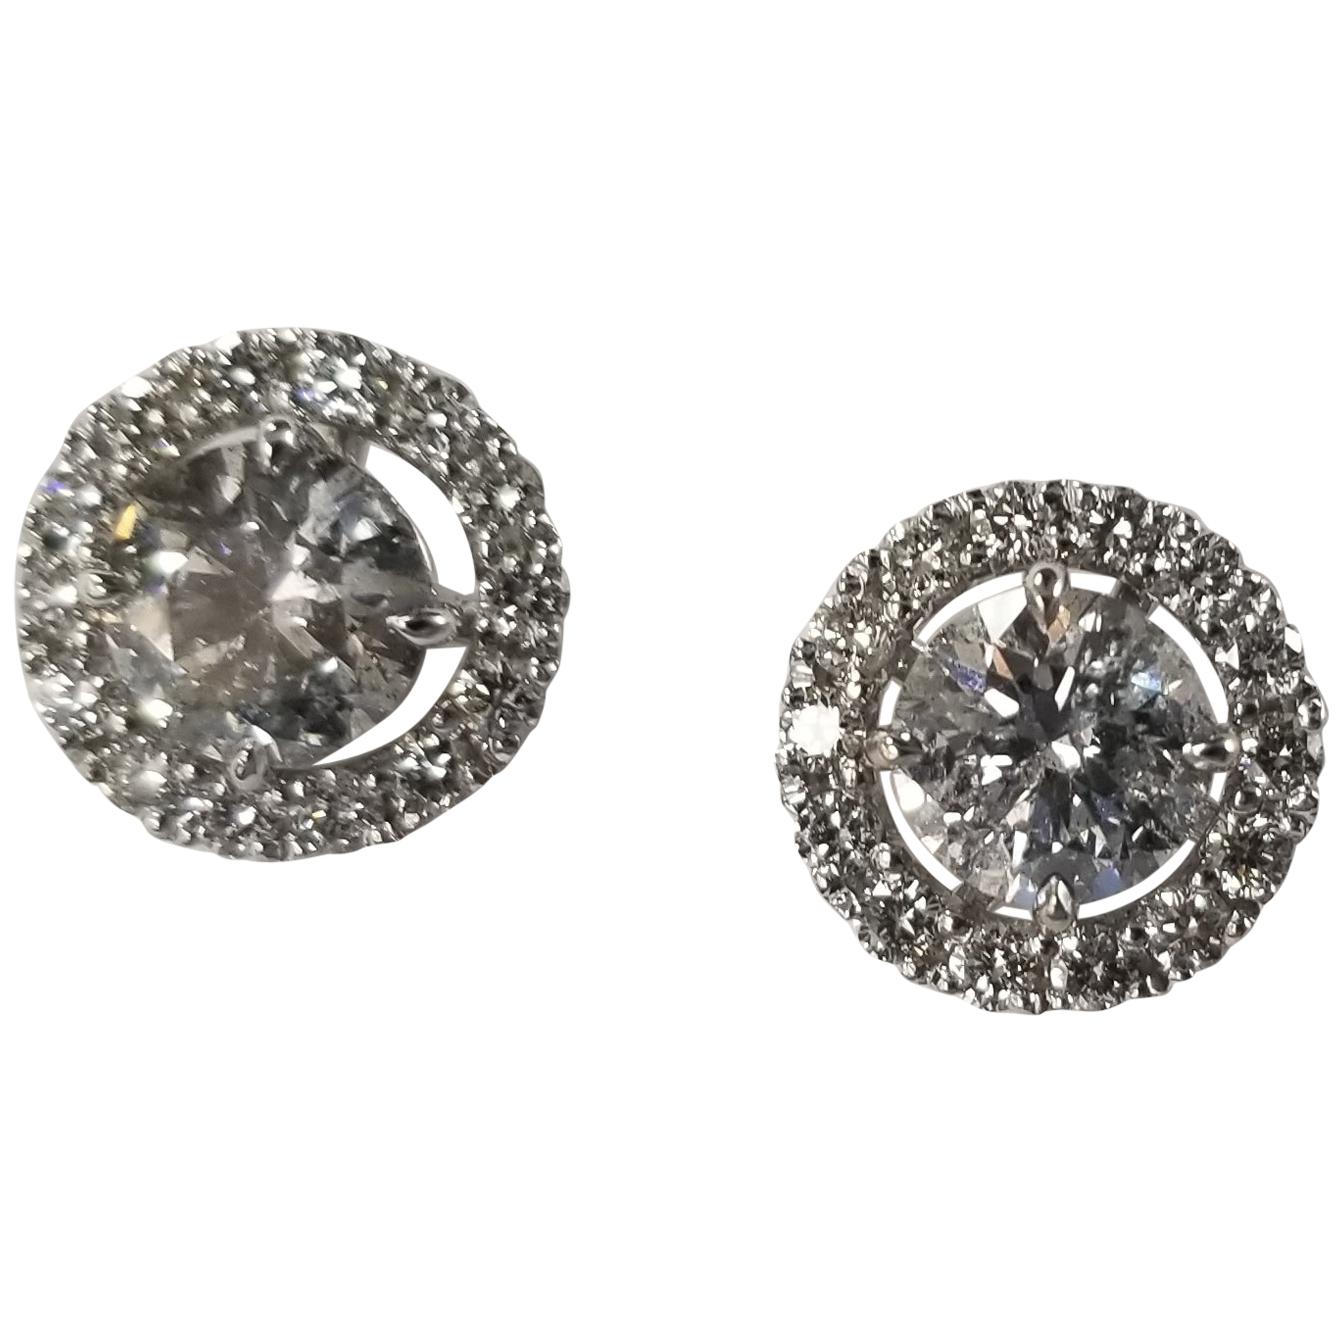 14k Gold Diamond Stud Earrings with Diamond Halo-Jackets Total Weight 2.71 Carat